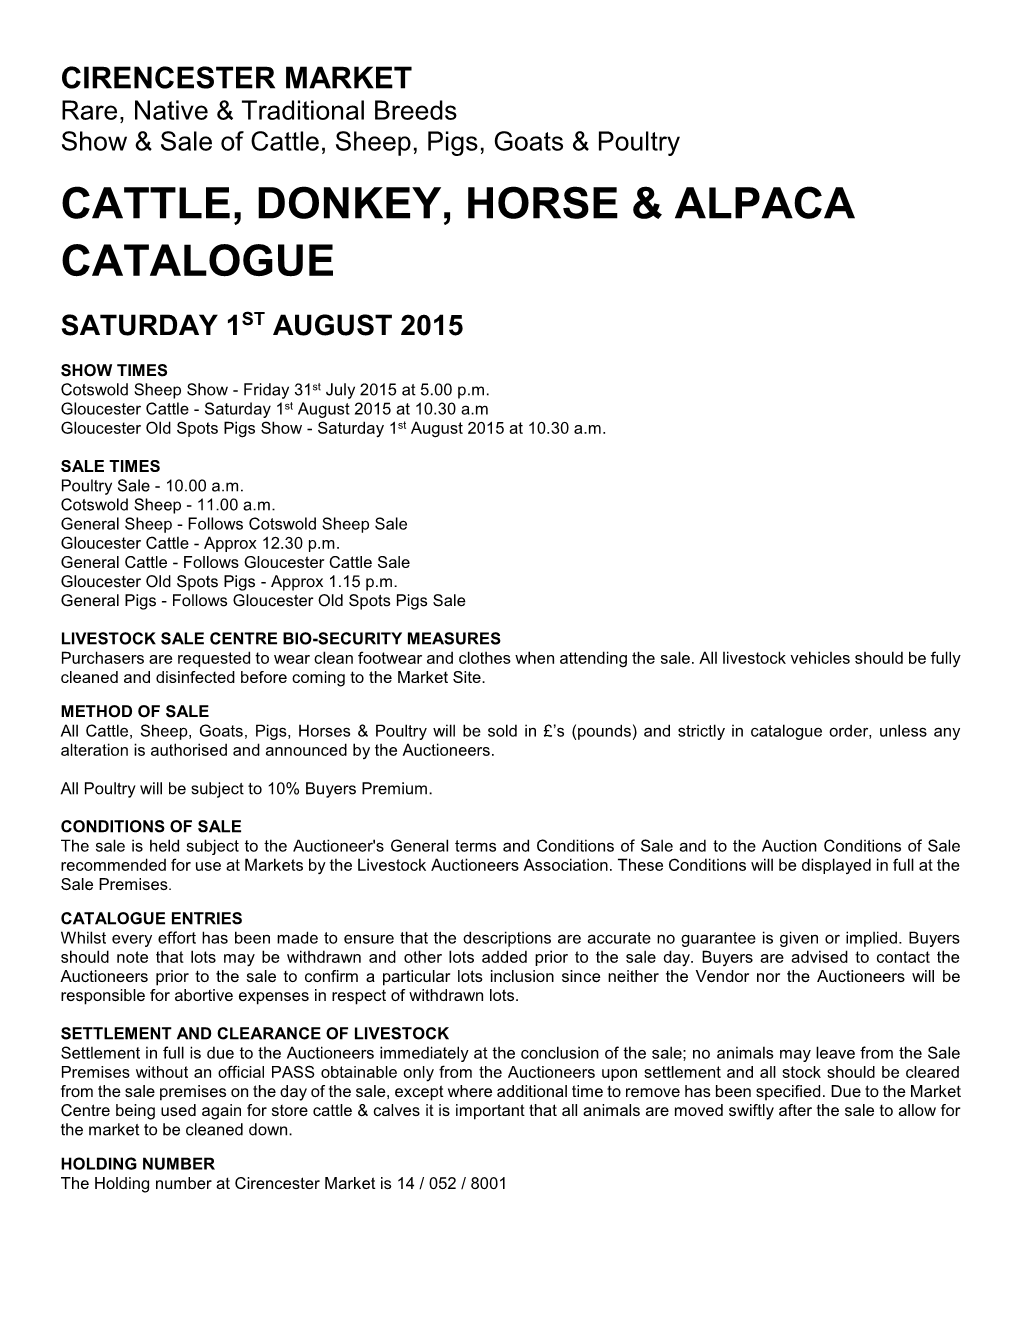 Cattle, Donkey, Horse & Alpaca Catalogue